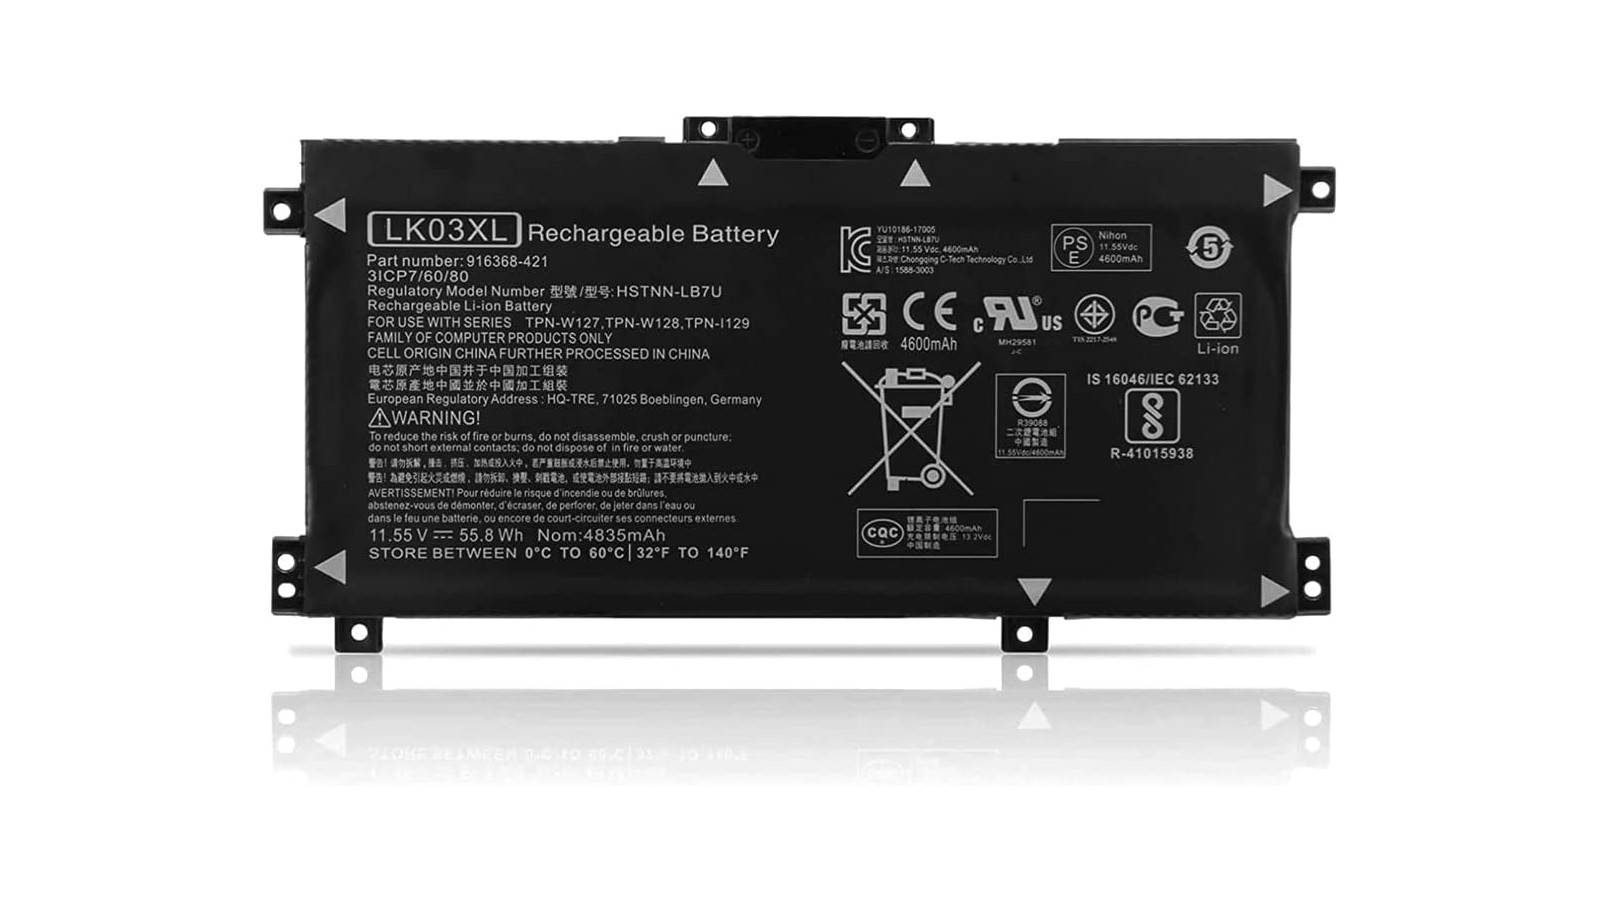 Batteria compatibile con Hp 916814-855 LK03XL LKO3XL HSTNNUB71 L090491B1 11.55V